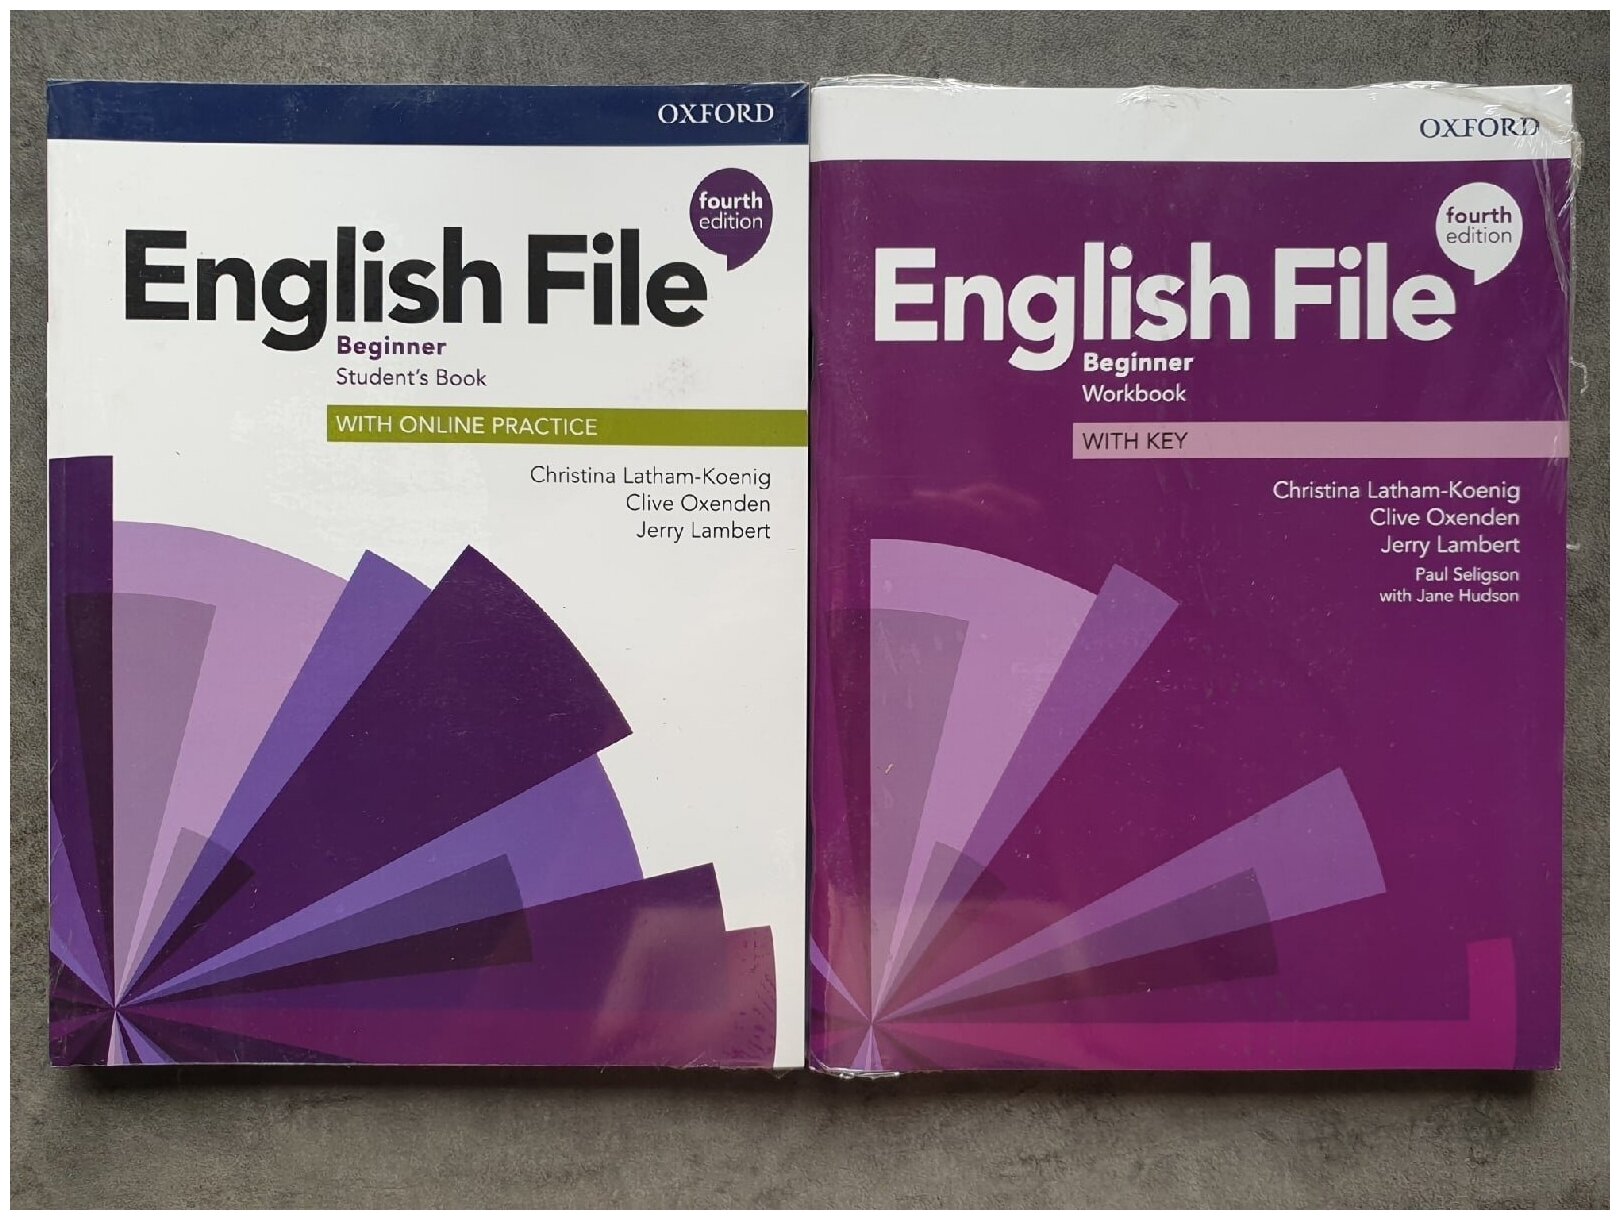 Комплект English File Beginner 4-th edition: Student's Book and Workbook (учебник и рабочая тетрадь, 2 книги) + CD-диск. Без кода к онлайн-версии